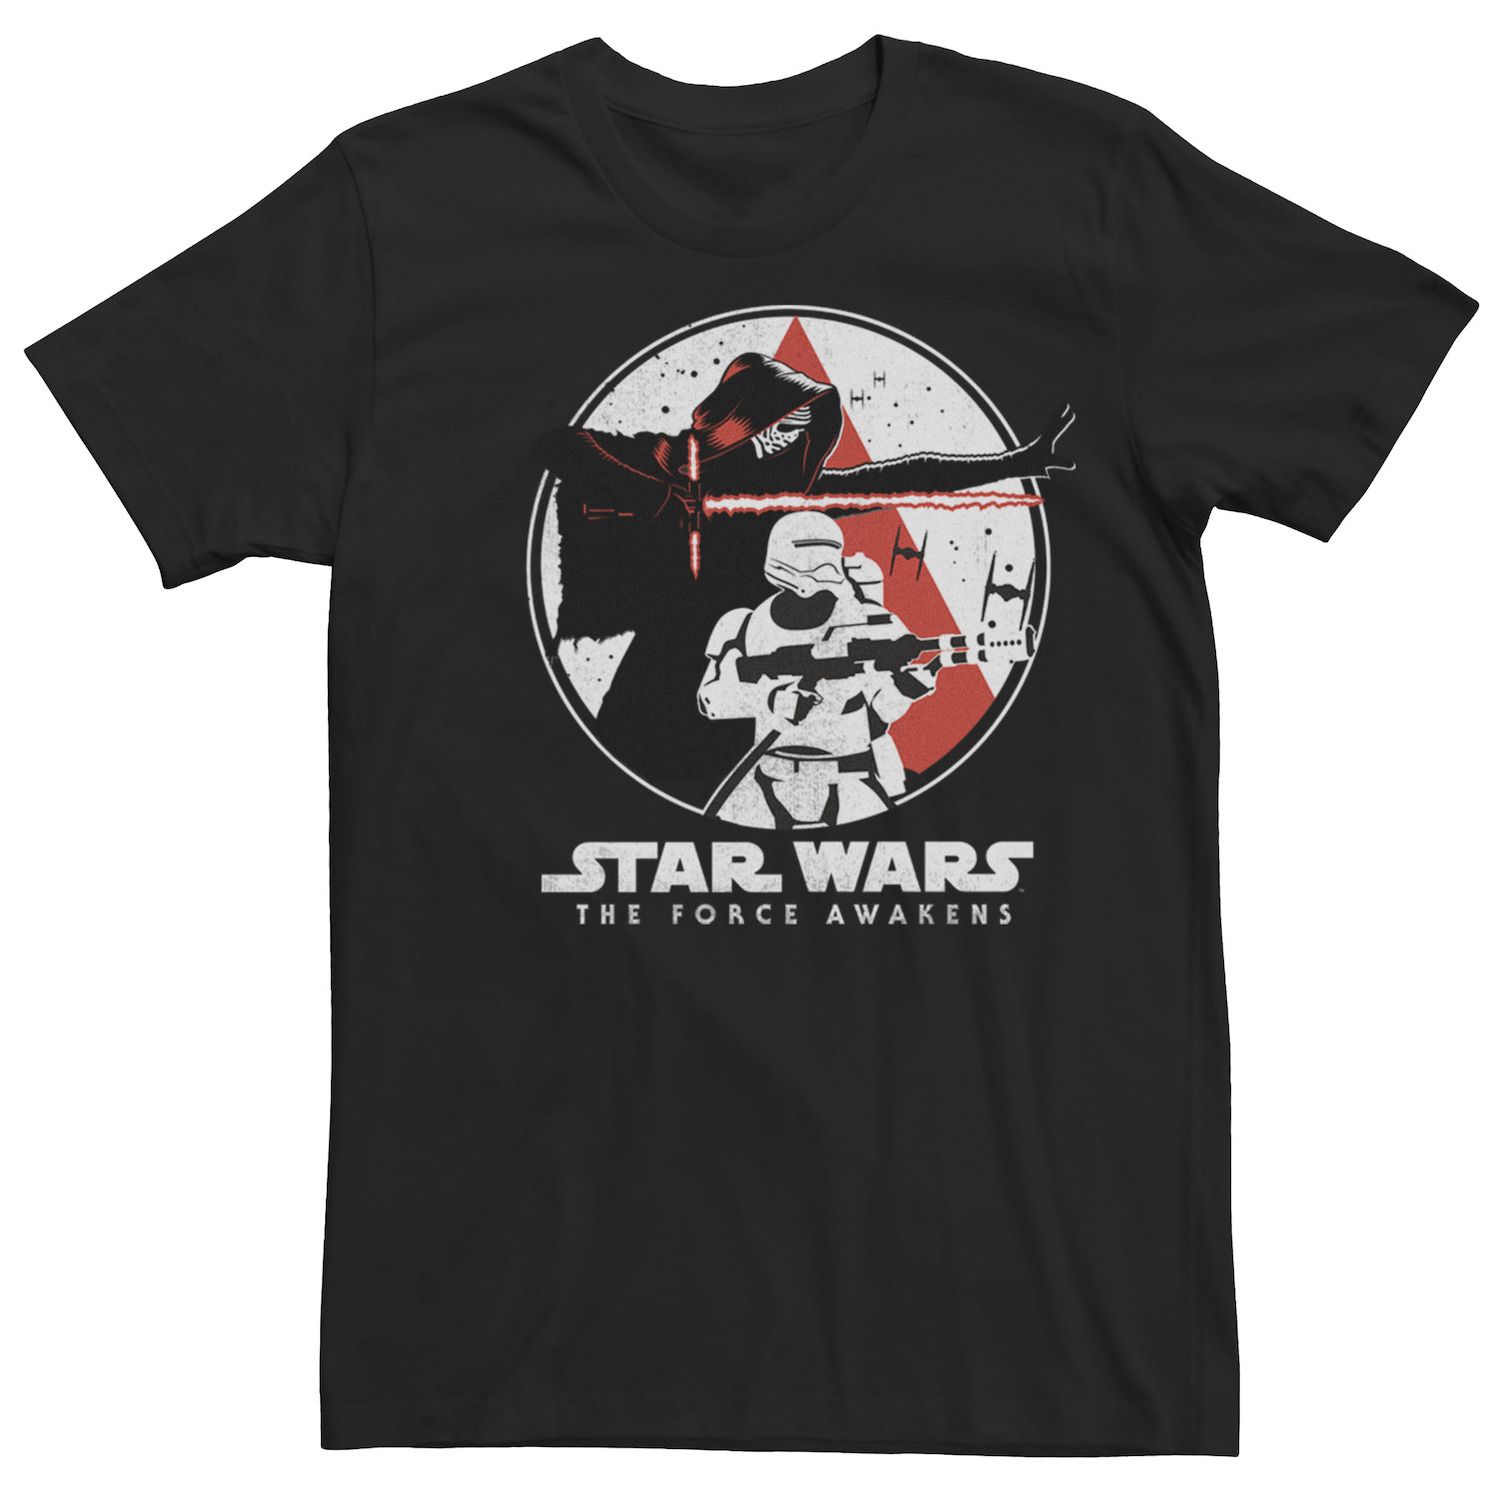 Мужская футболка The Force Awakens Battle Pose Star Wars foster alan dean star wars the force awakens